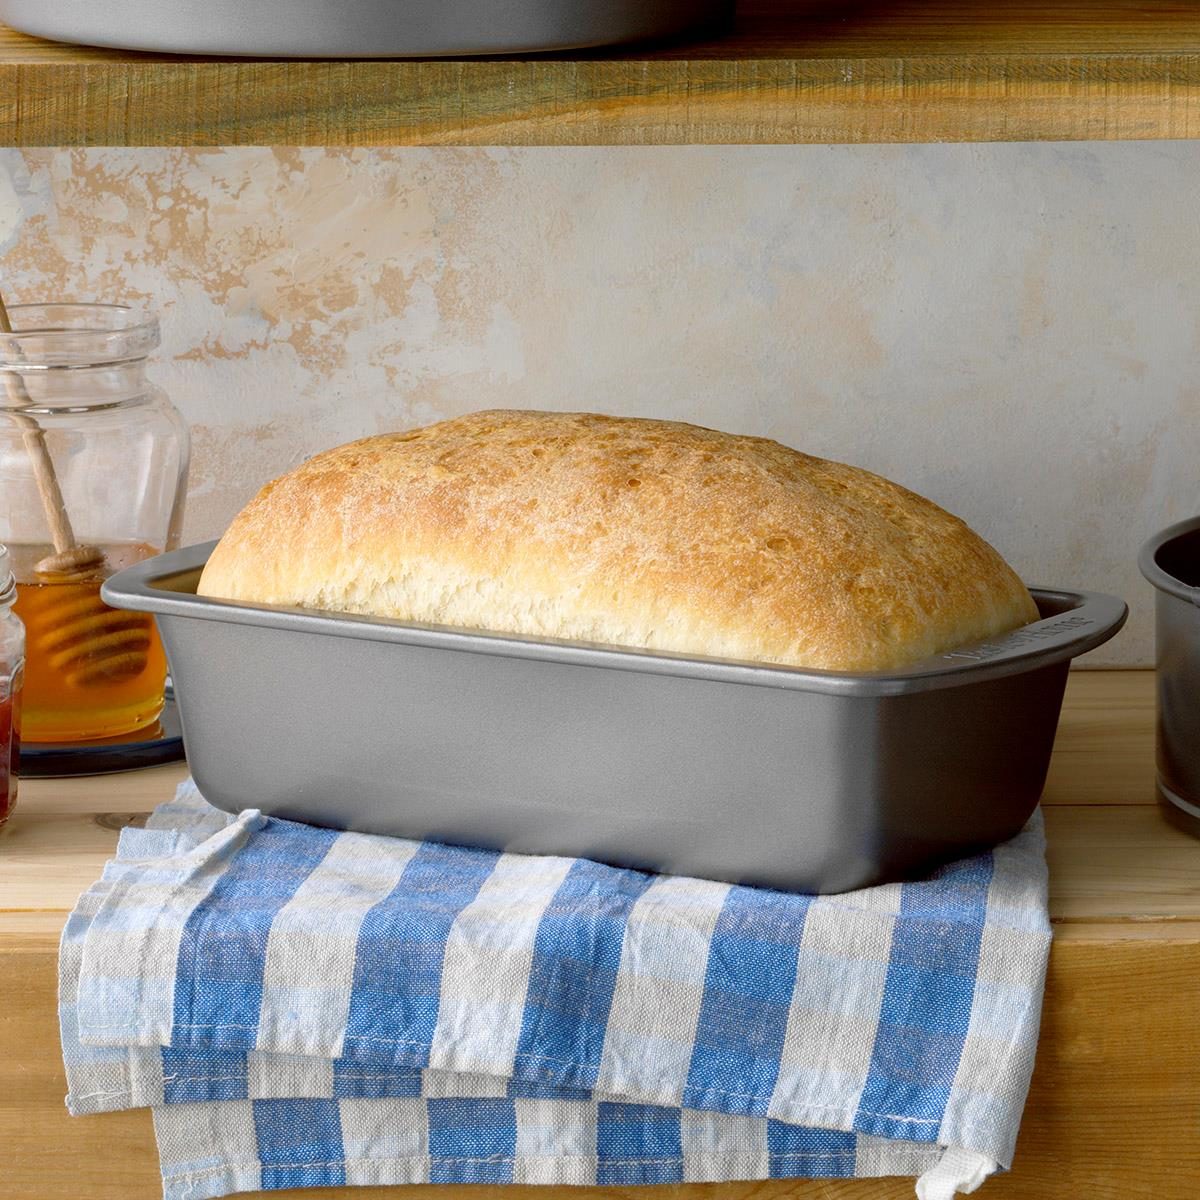 Basic homemade bread recipe